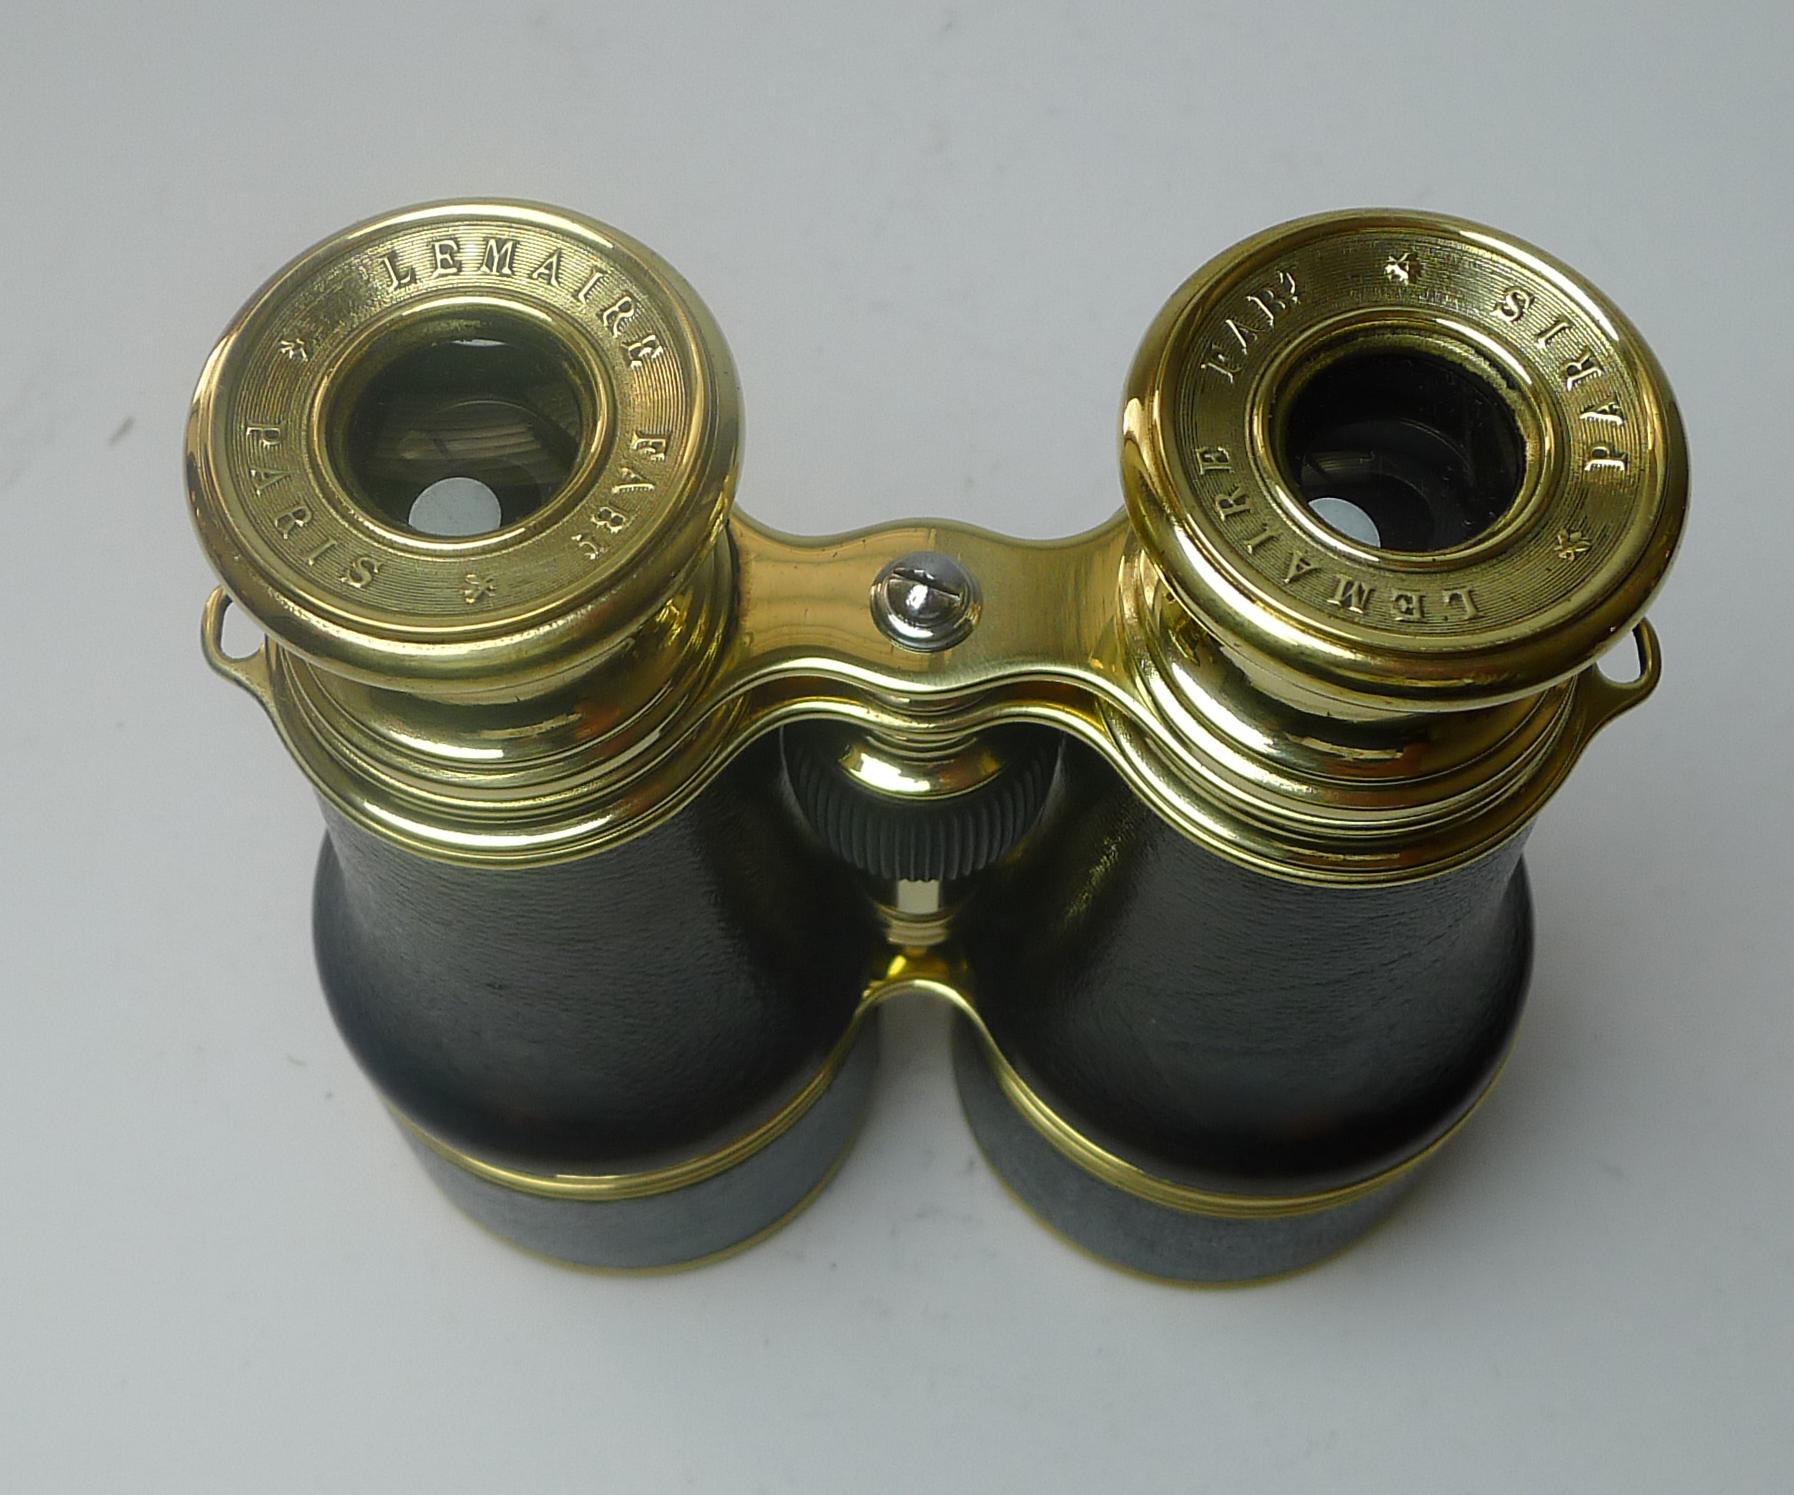 Pair WW1 Binoculars - British Officer's Issue by LeMaire, Paris 1